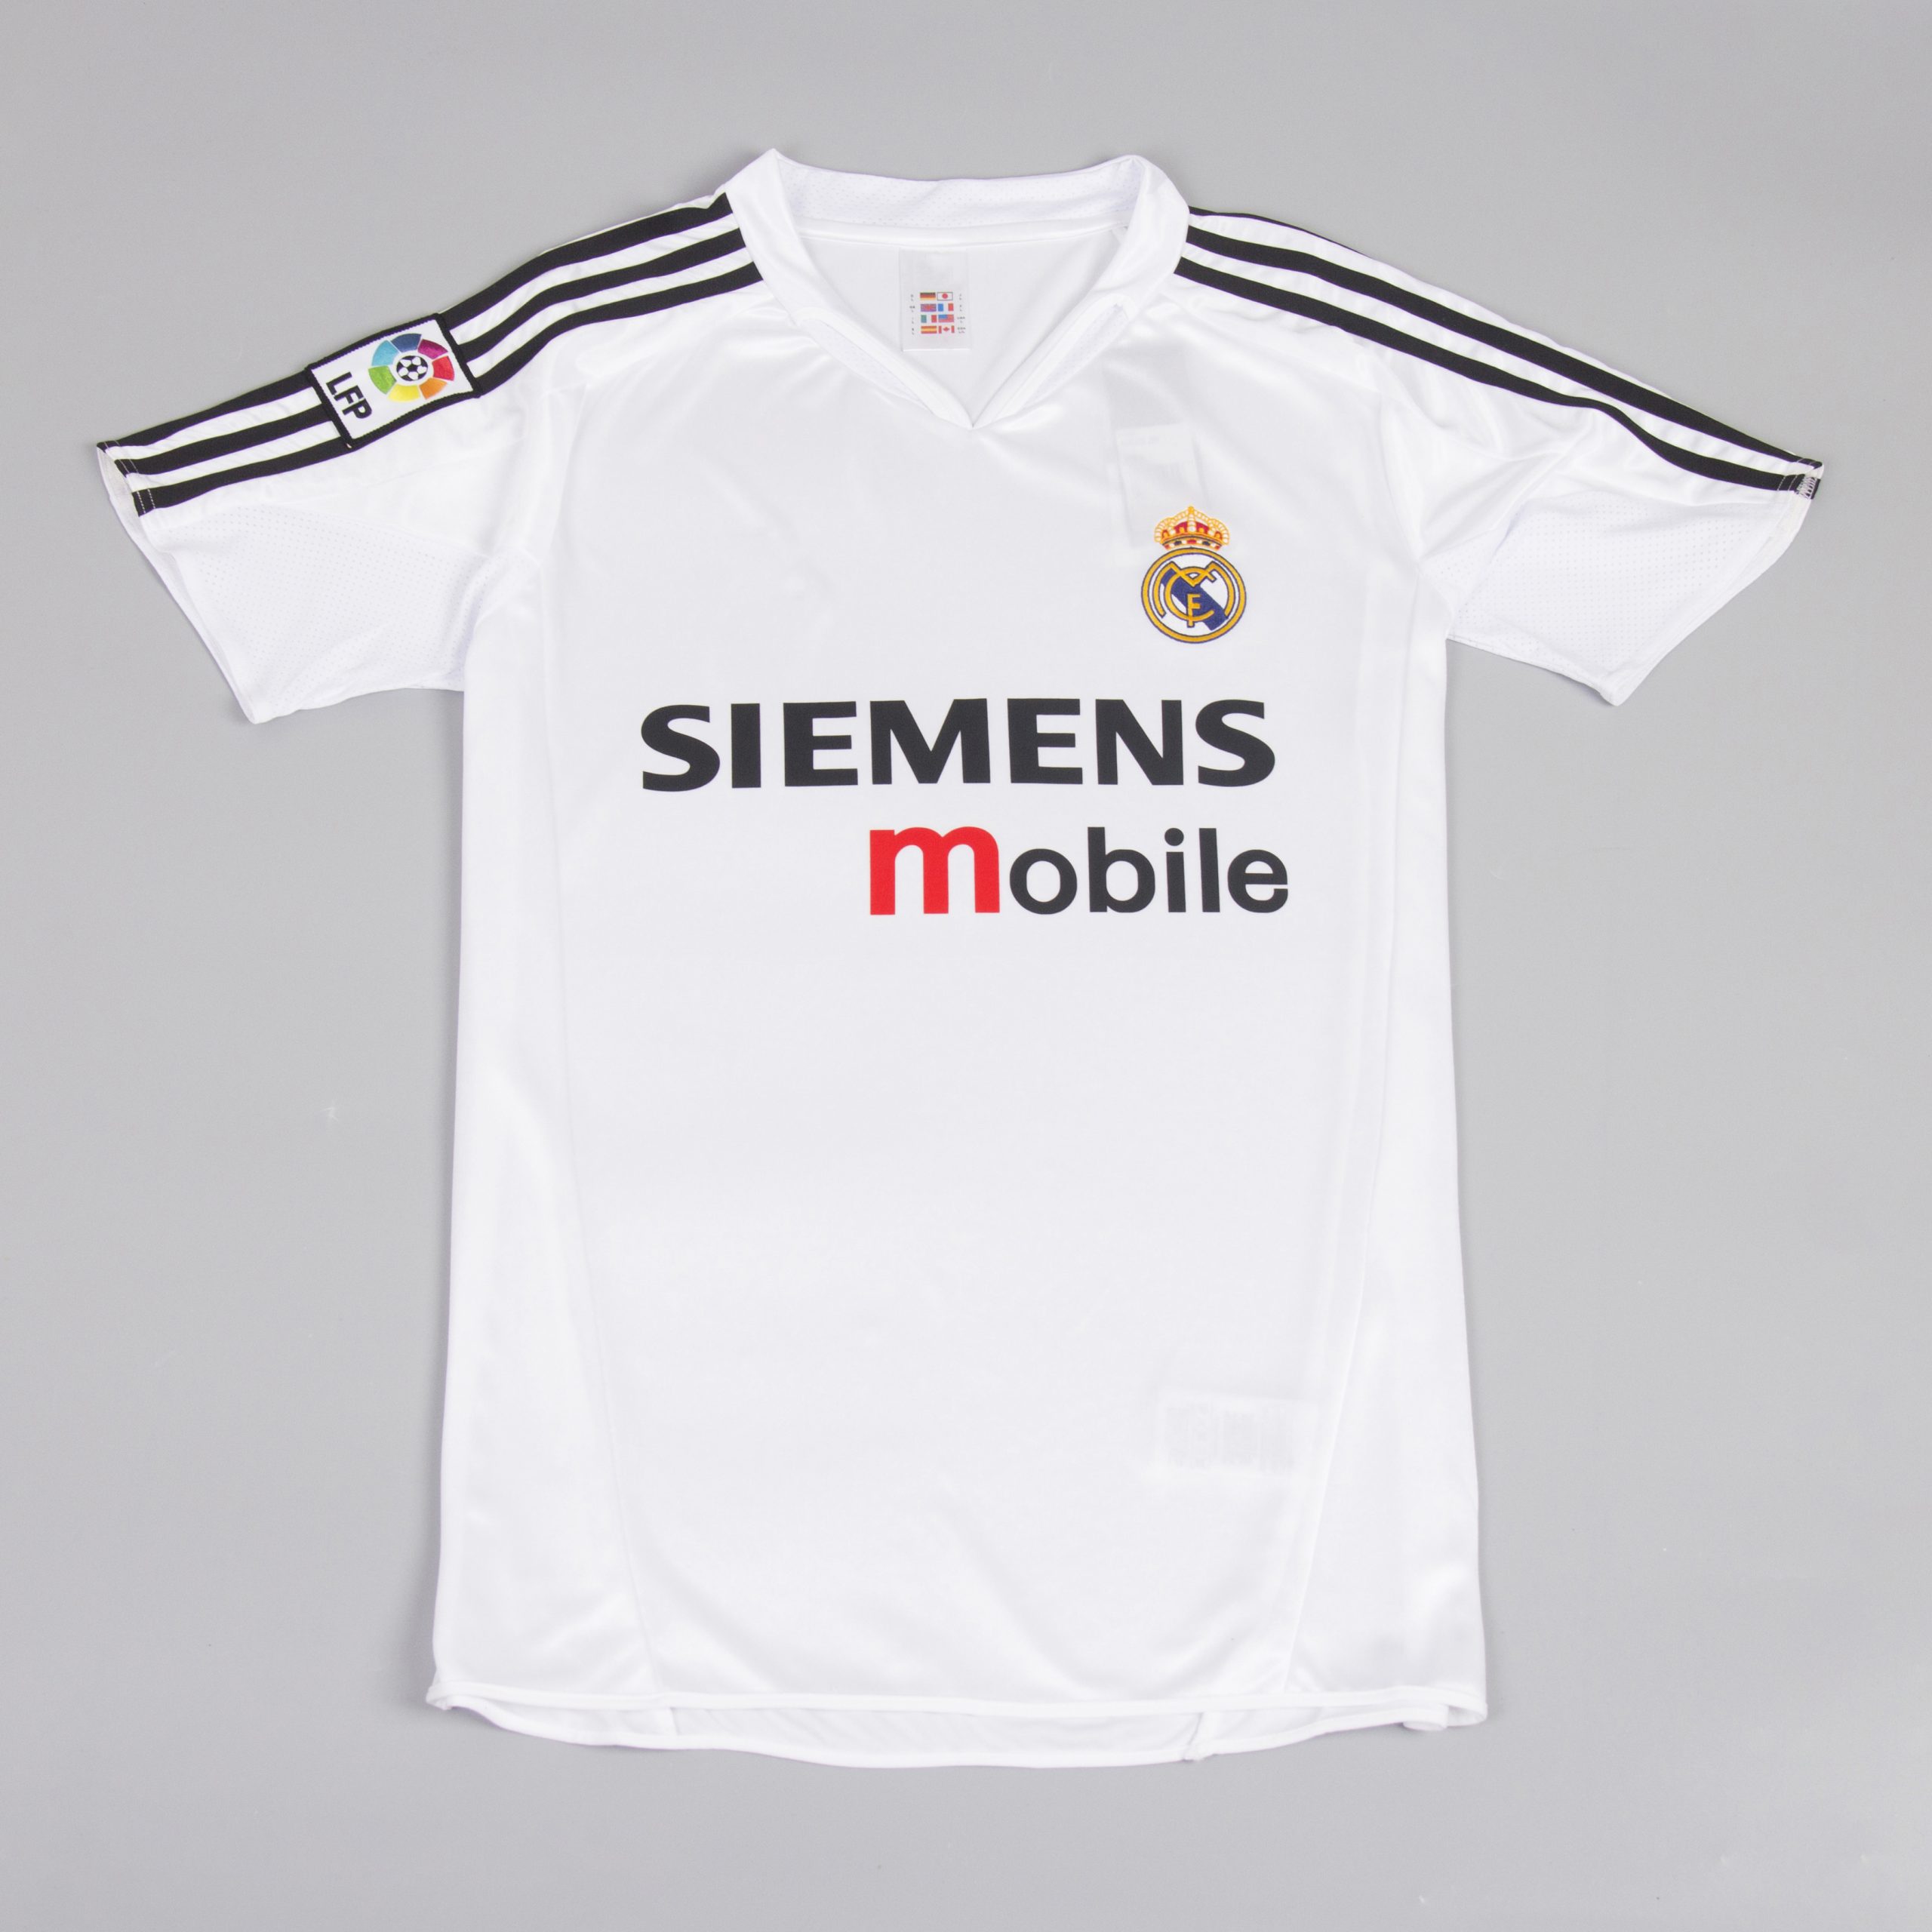 Real Madrid 2004-2005 Short Sleeve Football Shirt [As worn by Ronaldo, Zidane & Beckham]